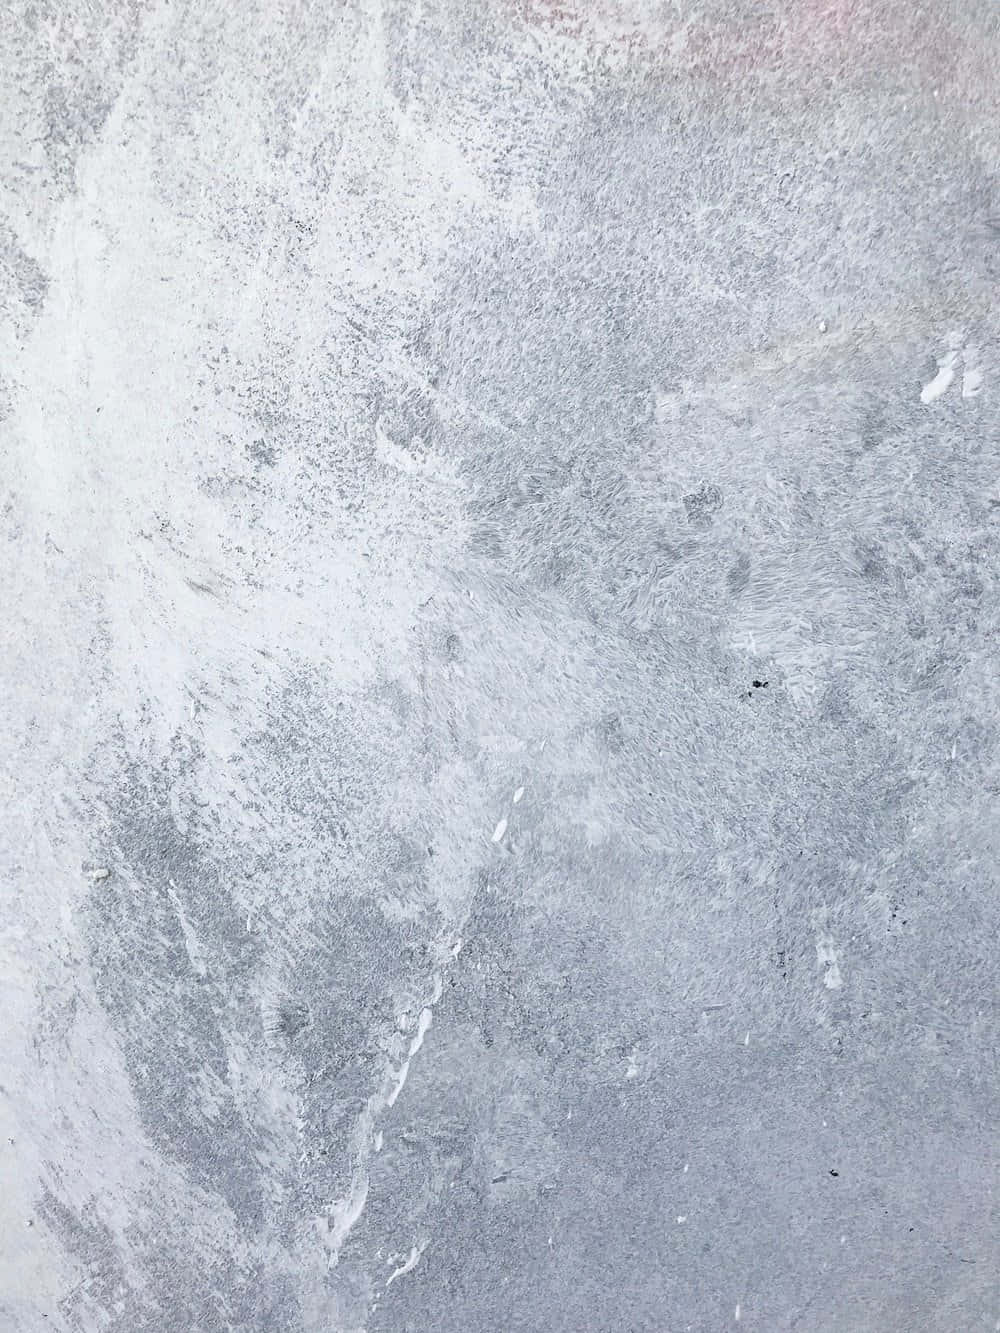 Grunge Gray Concrete Texture Picture